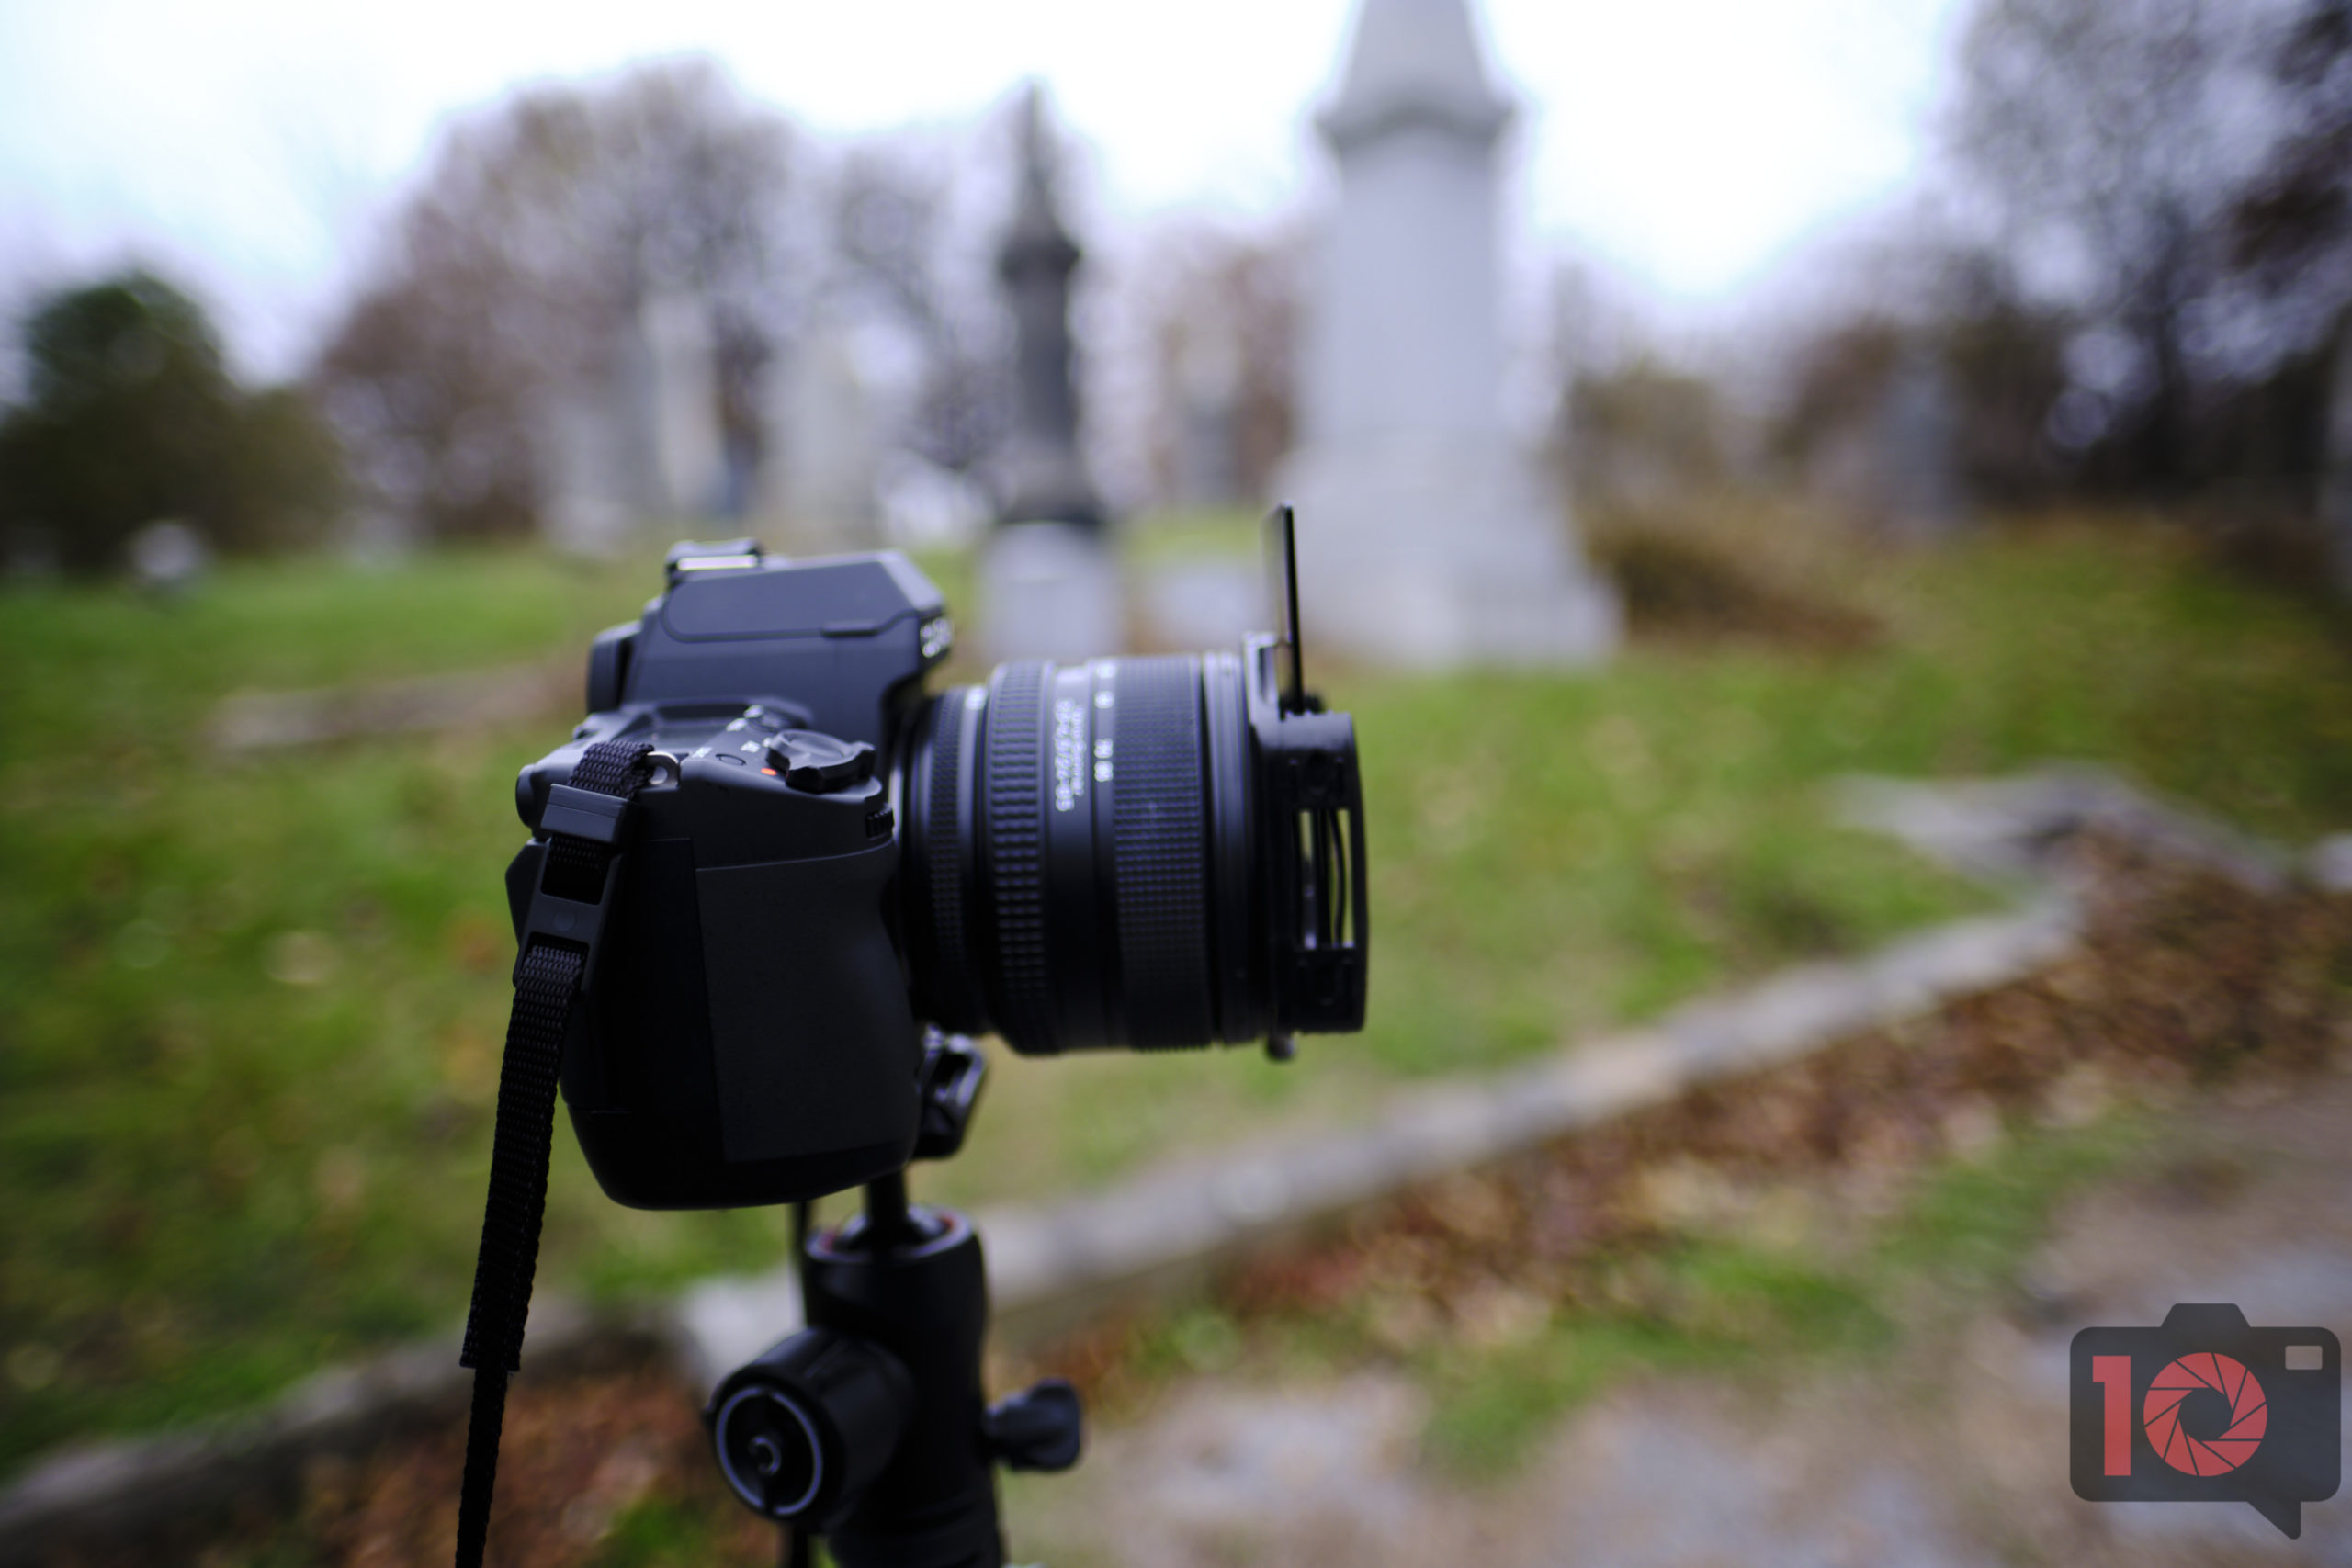 Chris Gampat The Phoblographer Fujifilm X Pro 3 Review Samples 1.41-640s160